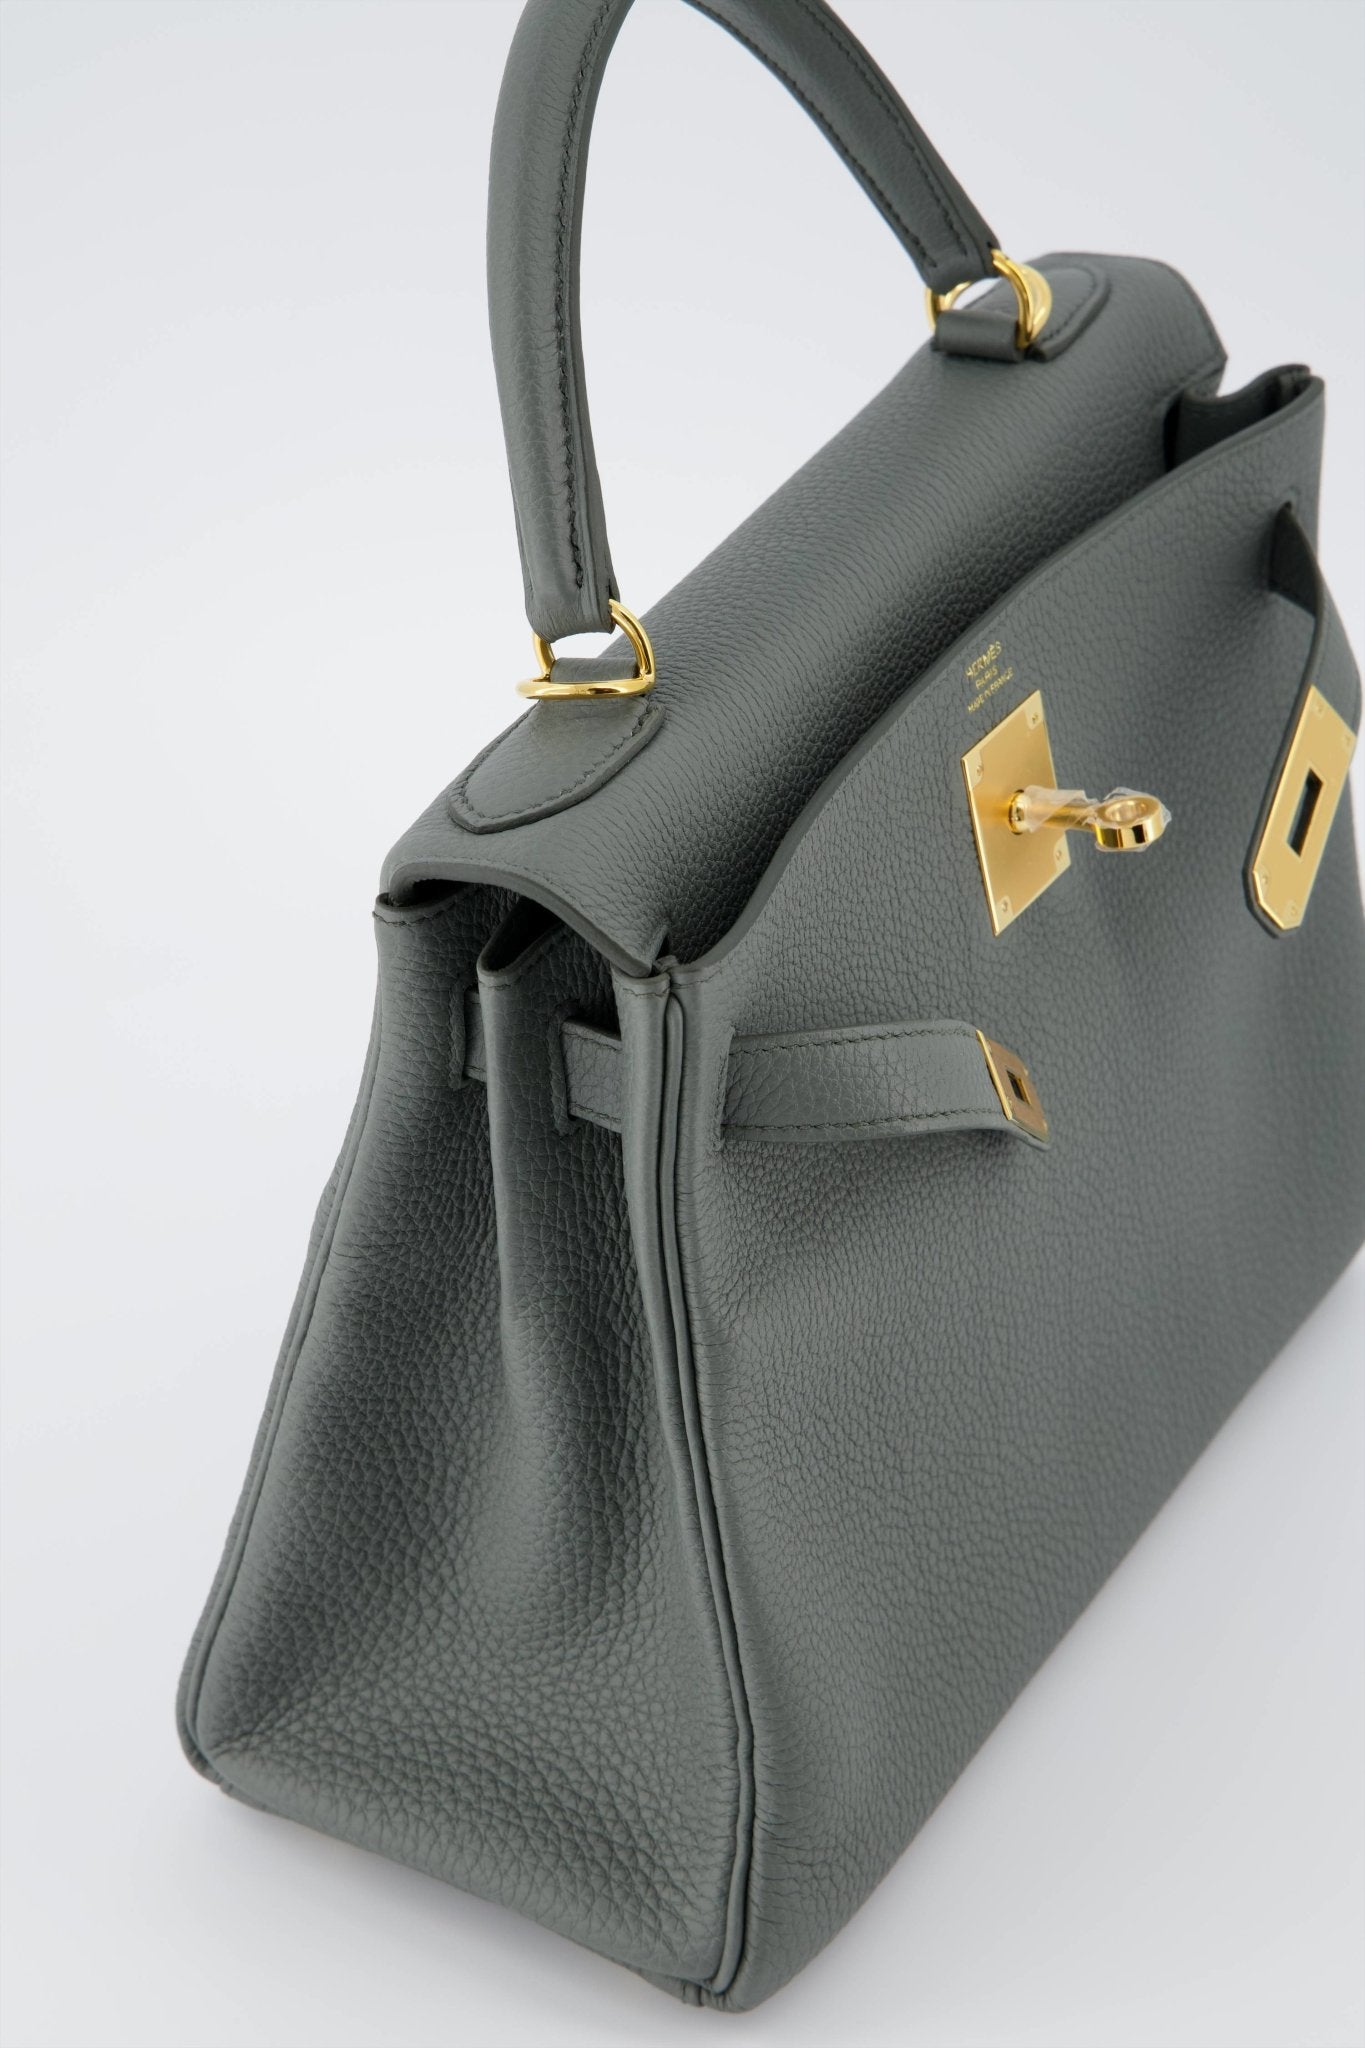 Hermes Kelly Handbag Vert Maquis Togo with Gold Hardware 28